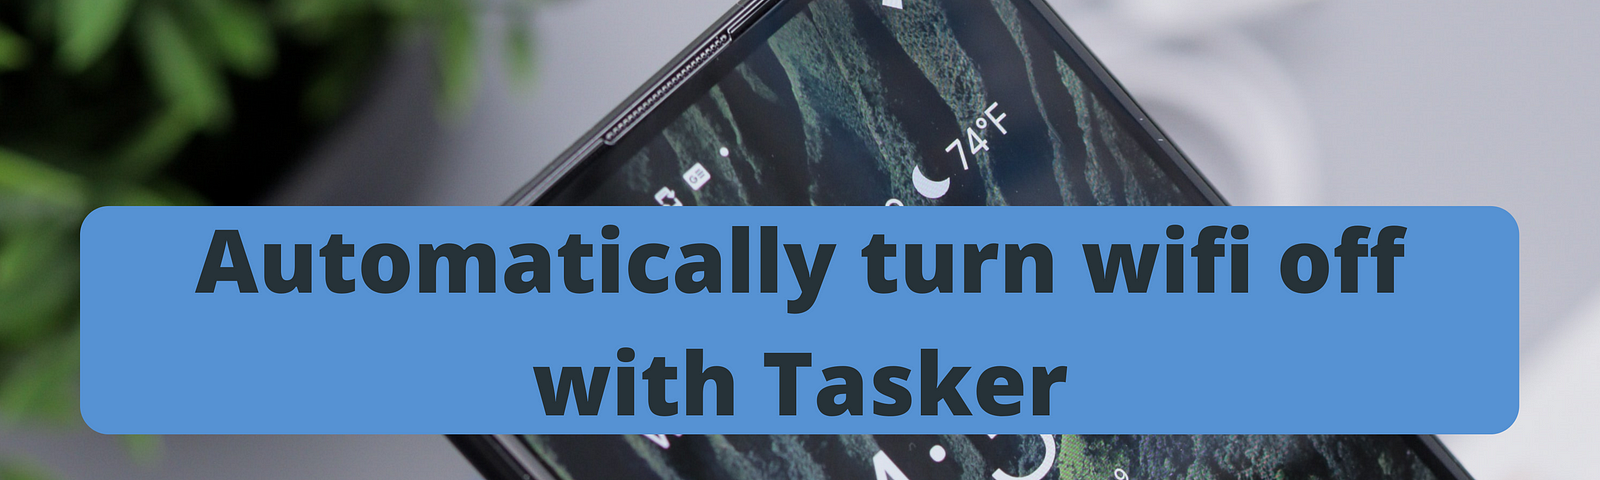 Automatically turn wifi off with Tasker by Alberto Piras | Geek | Medium